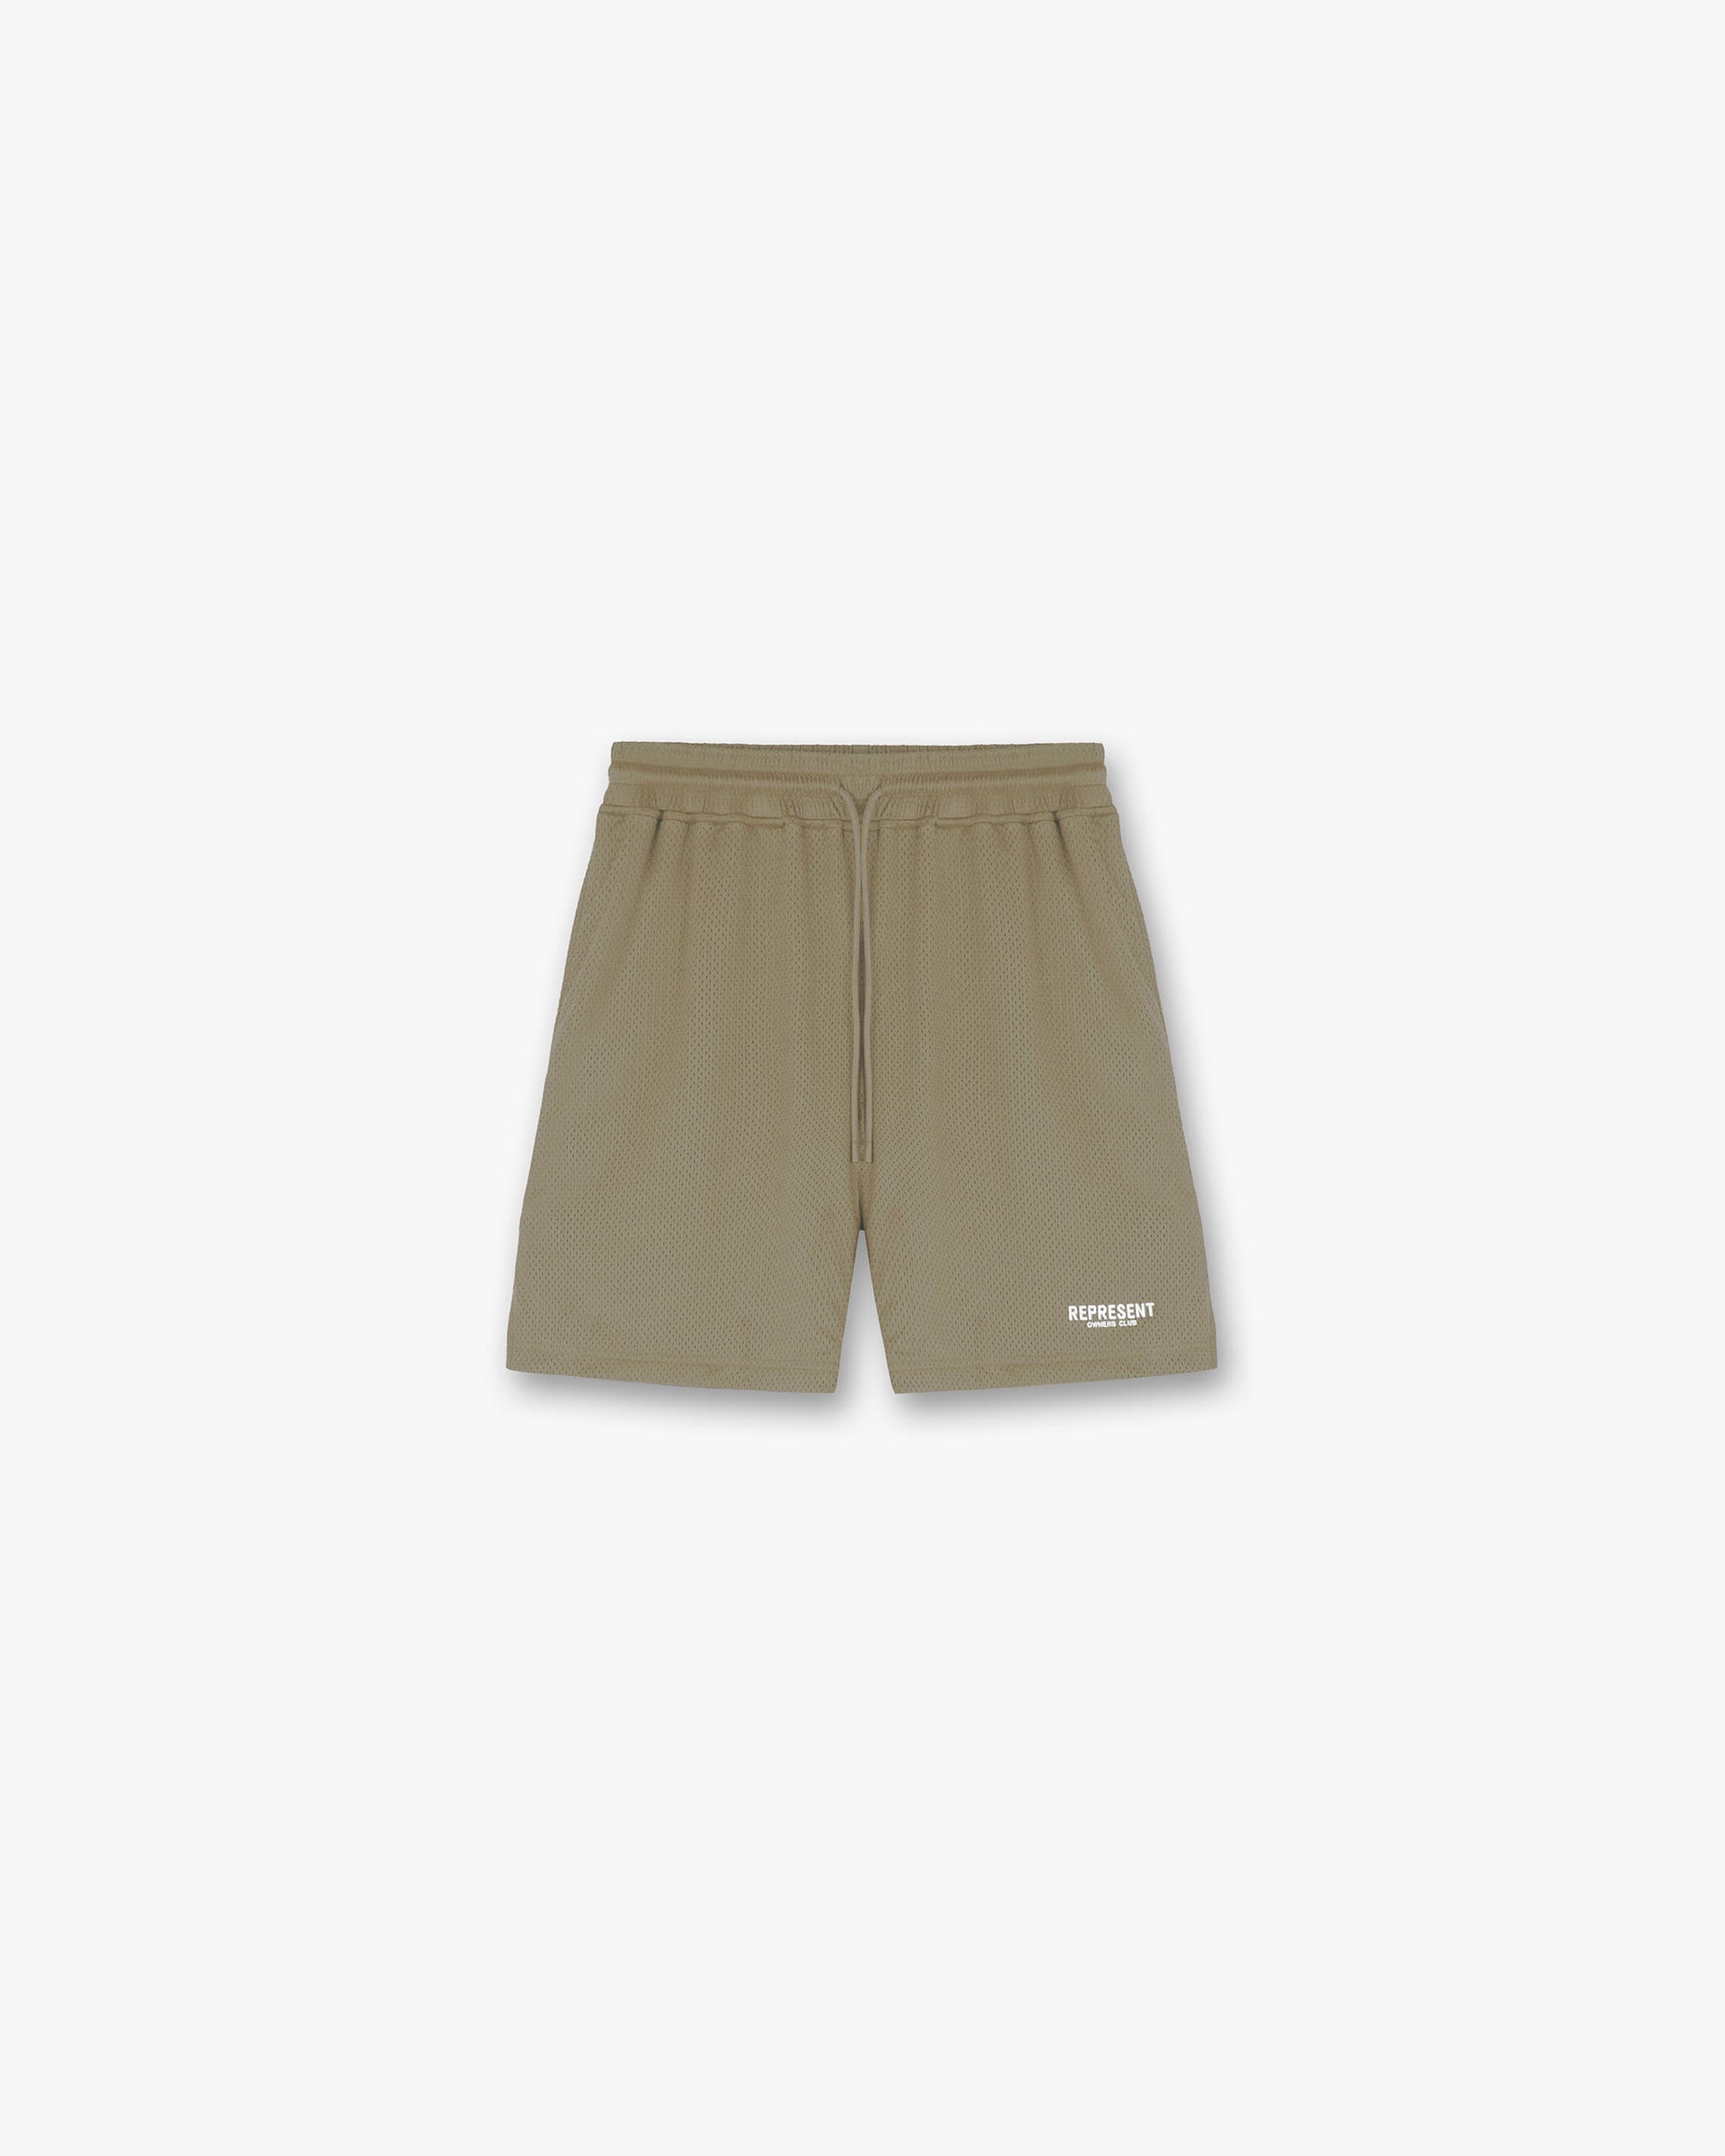 Represent Owners Club Mesh Shorts | Khaki Shorts Owners Club | Represent Clo